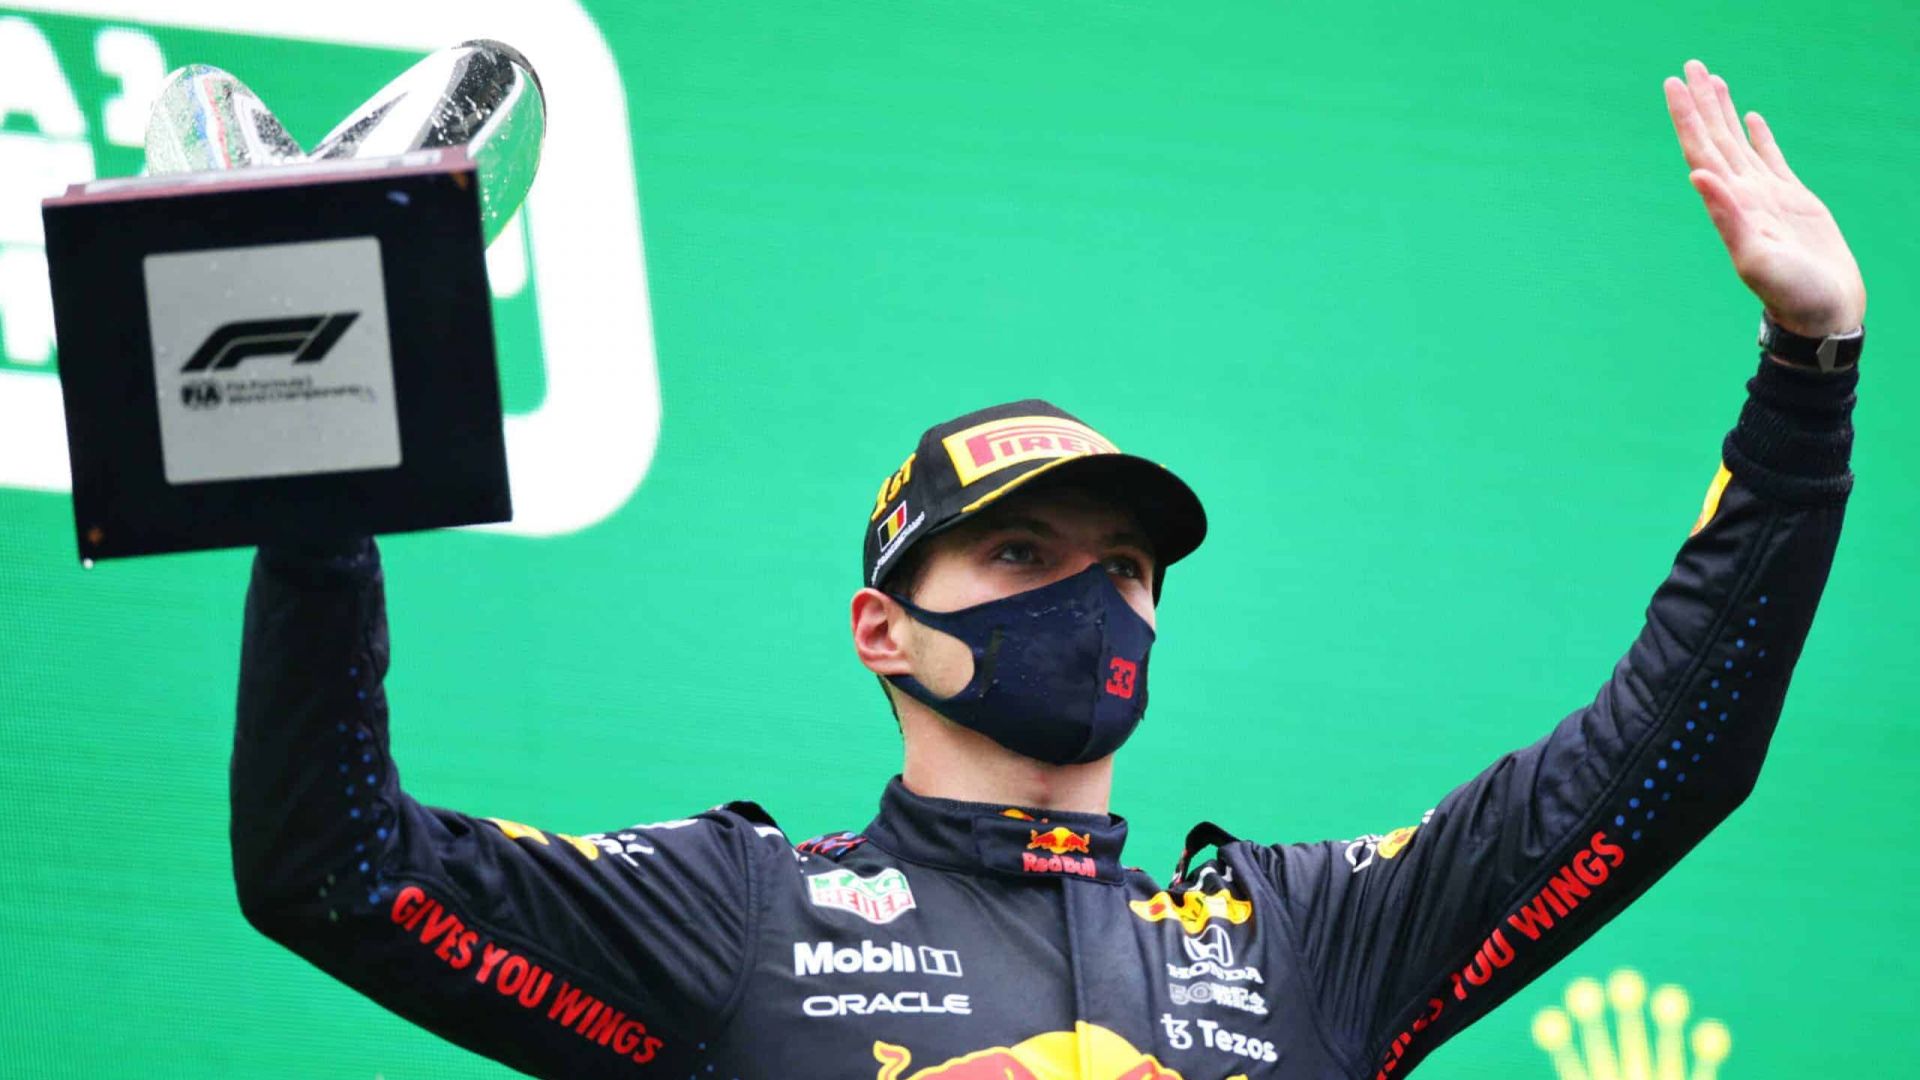 2021 Belgian Grand Prix, Sunday. Max Verstappen (image courtesy Red Bull Racing)